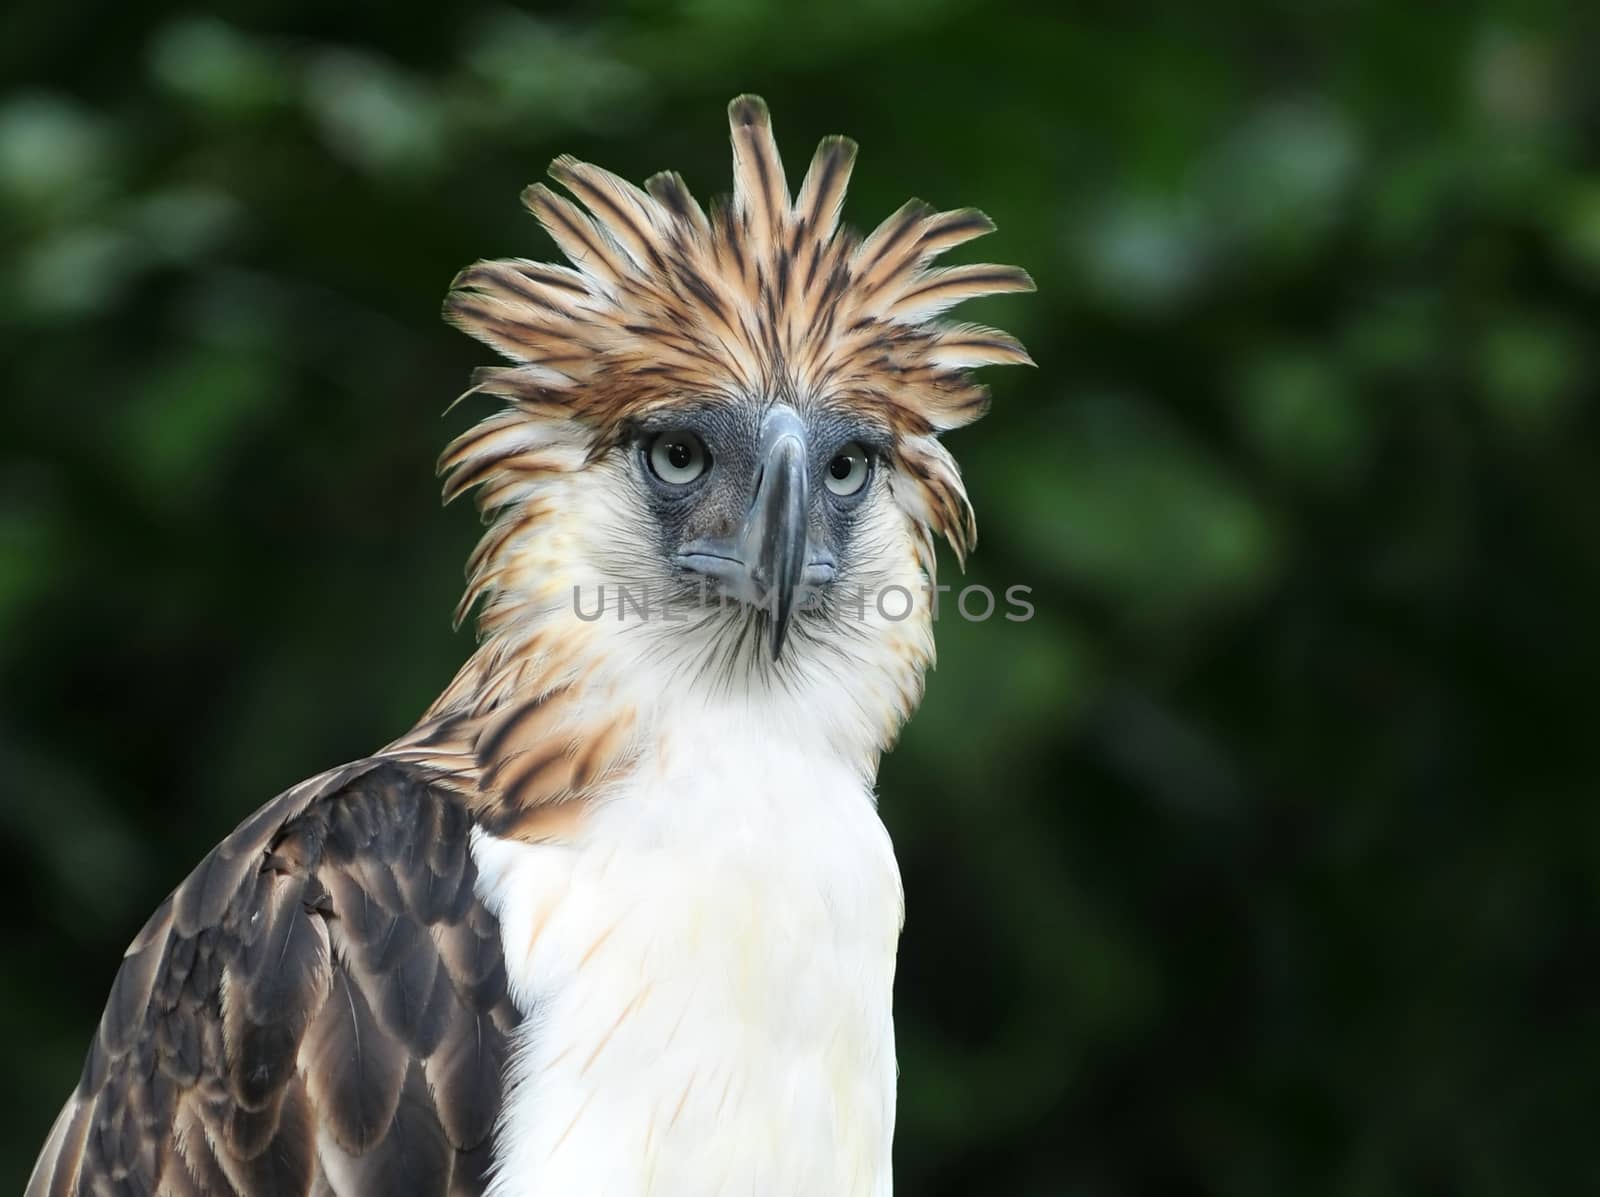 Philippine Eagle by igorot